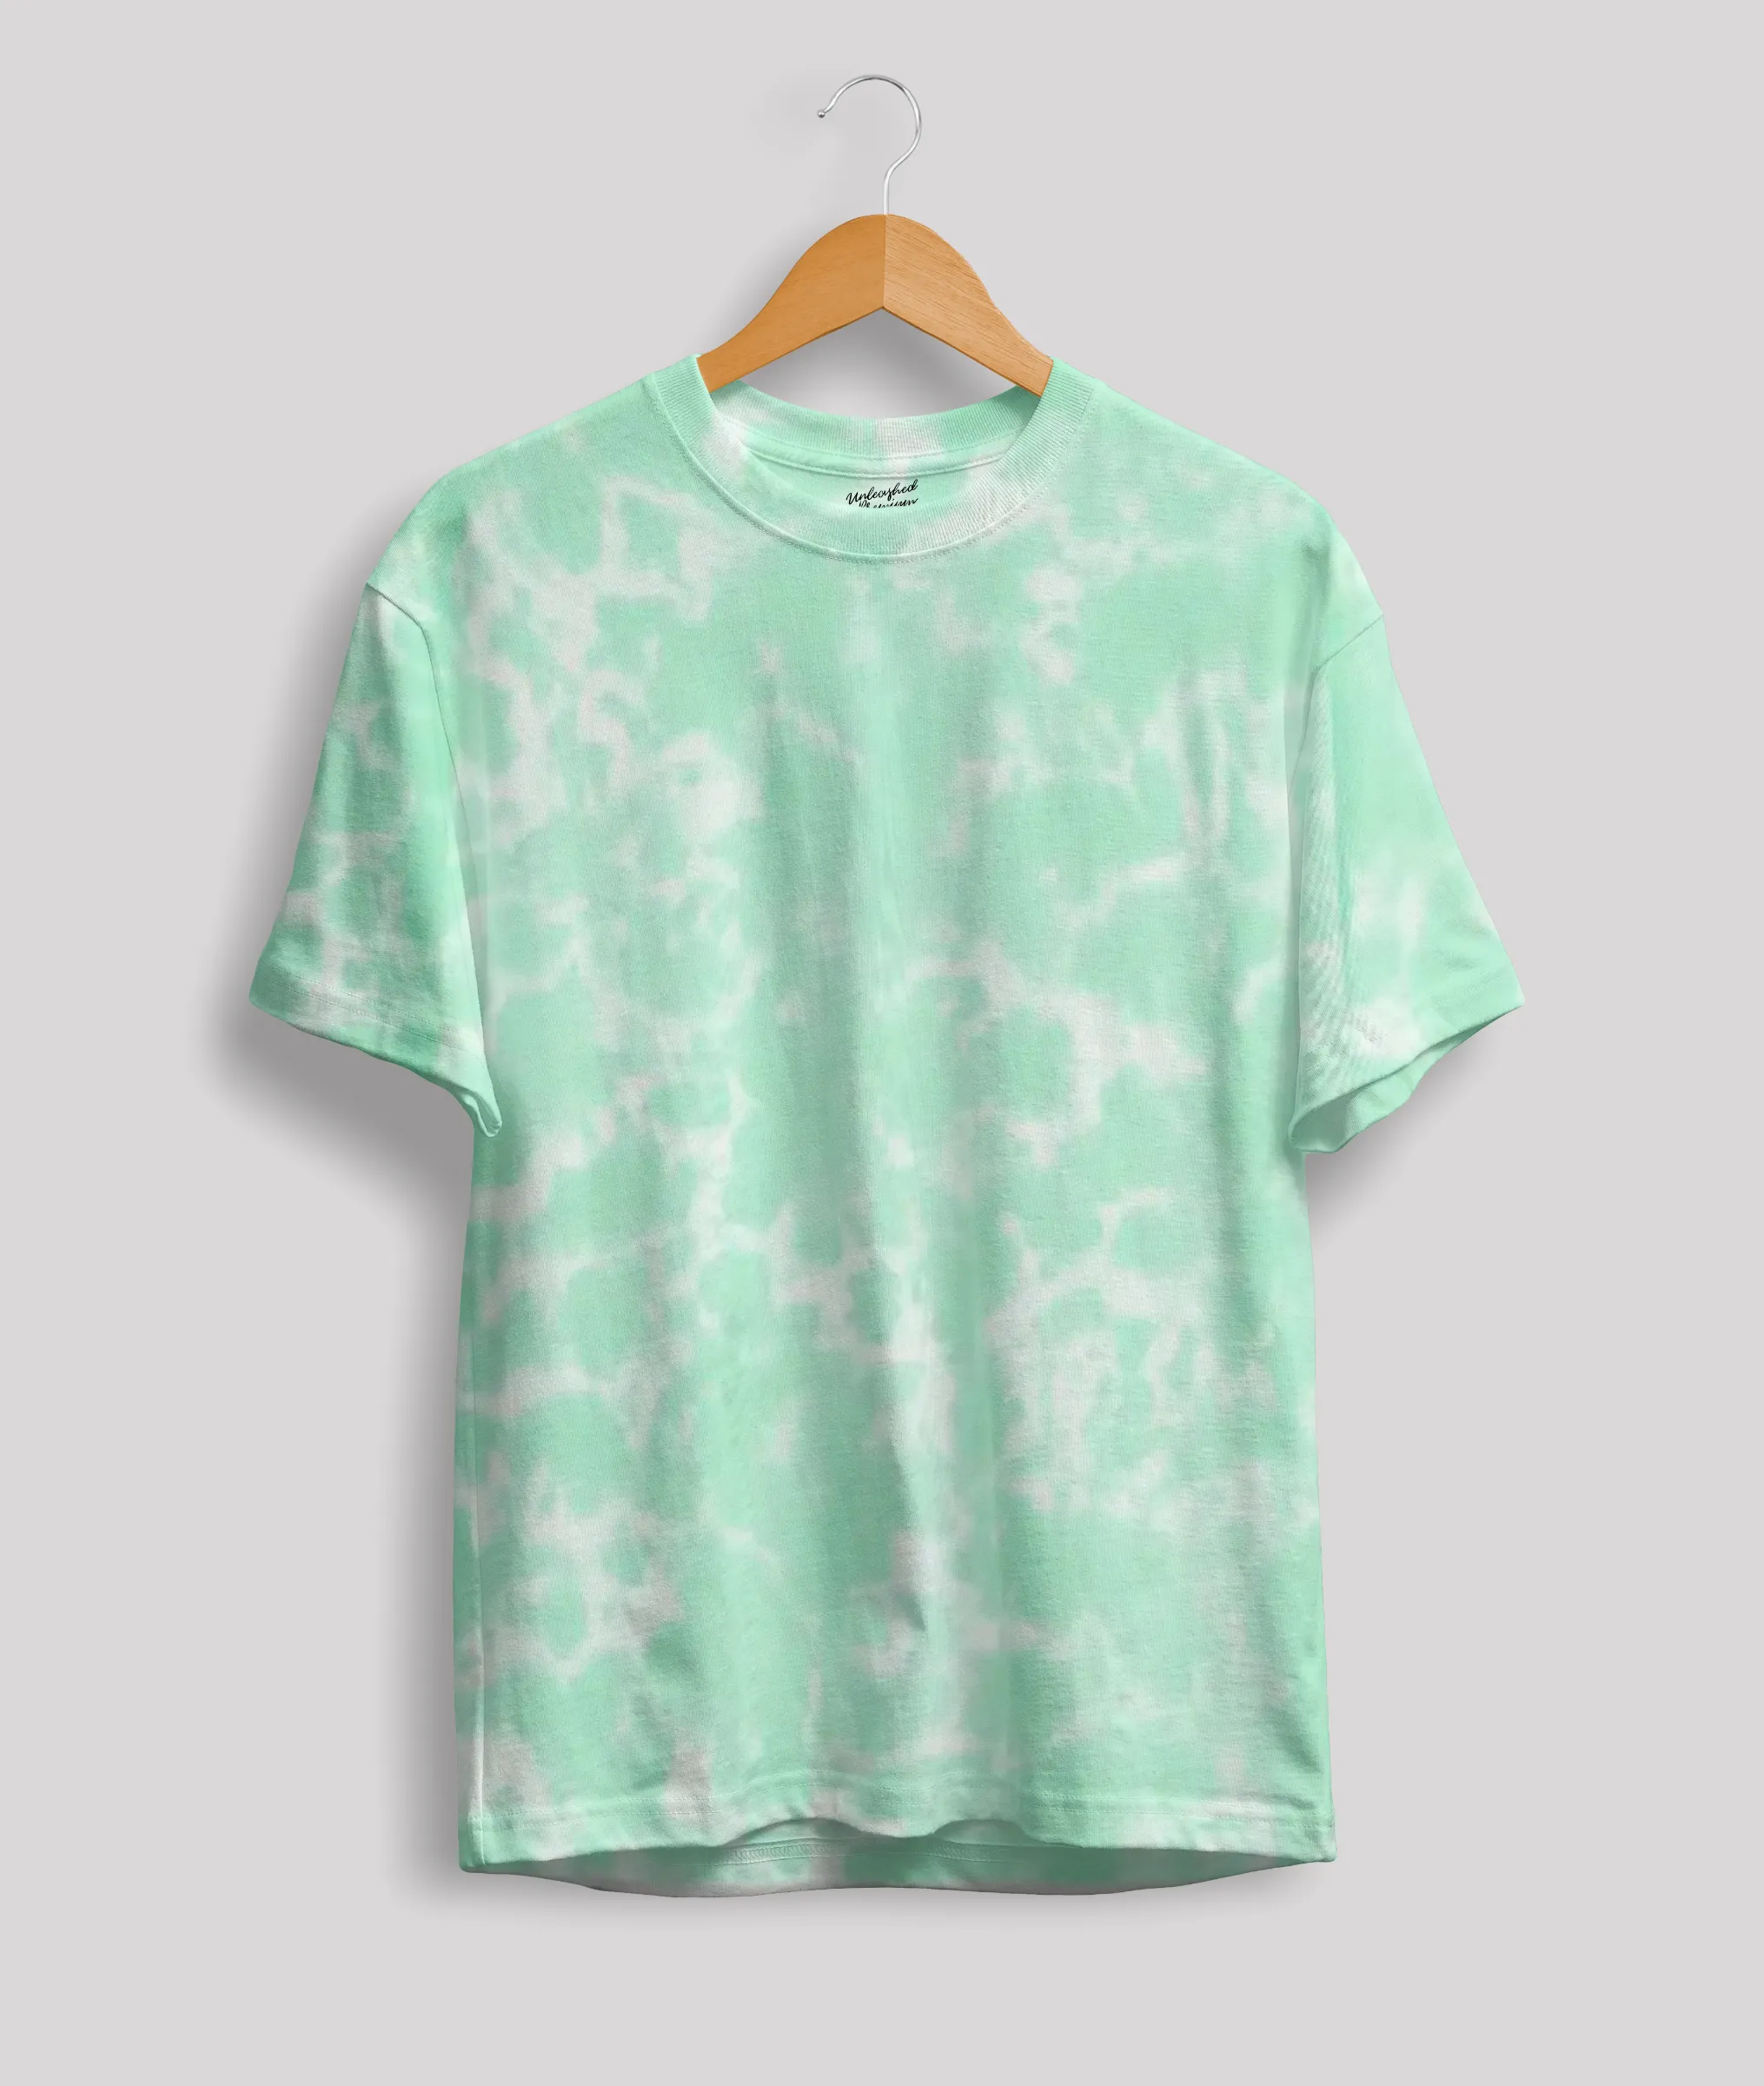 Tie Dye Mint Green T-Shirt